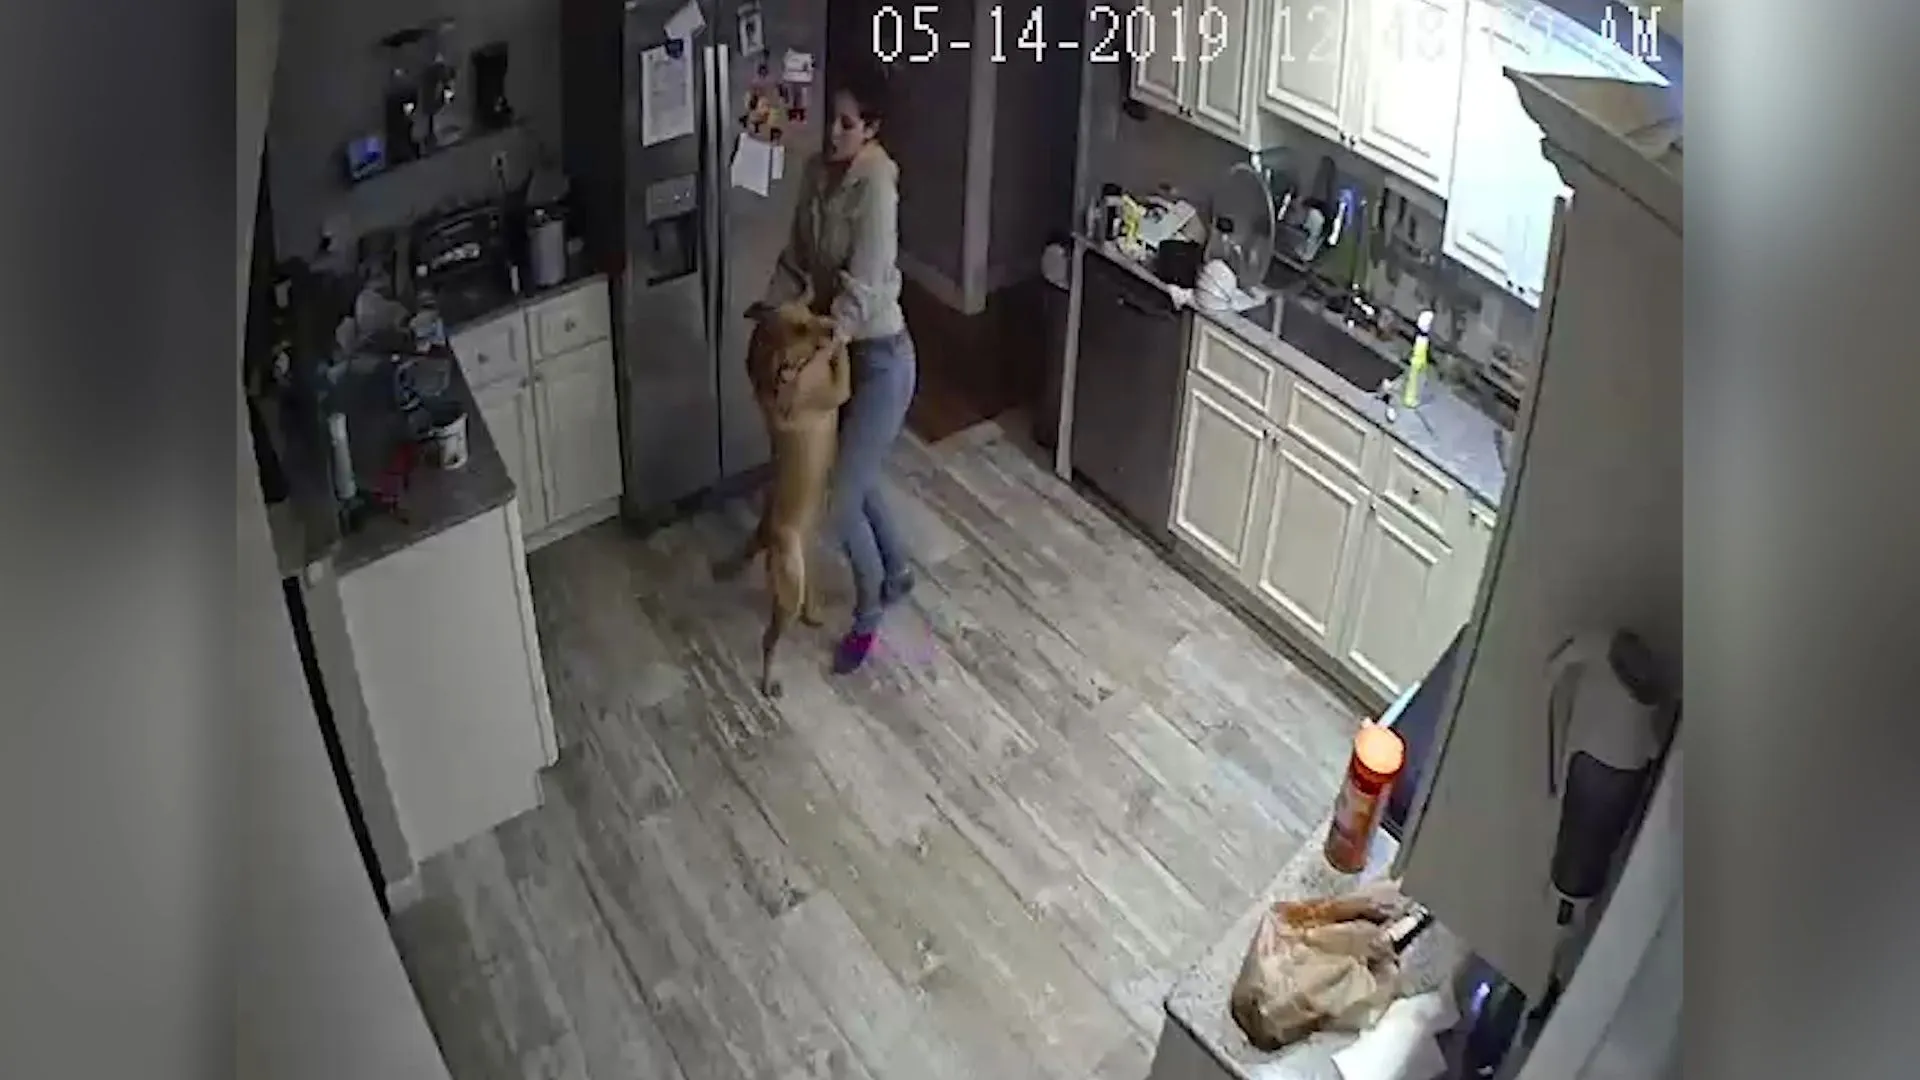 Woman dances with dog and triggers burglar alarm